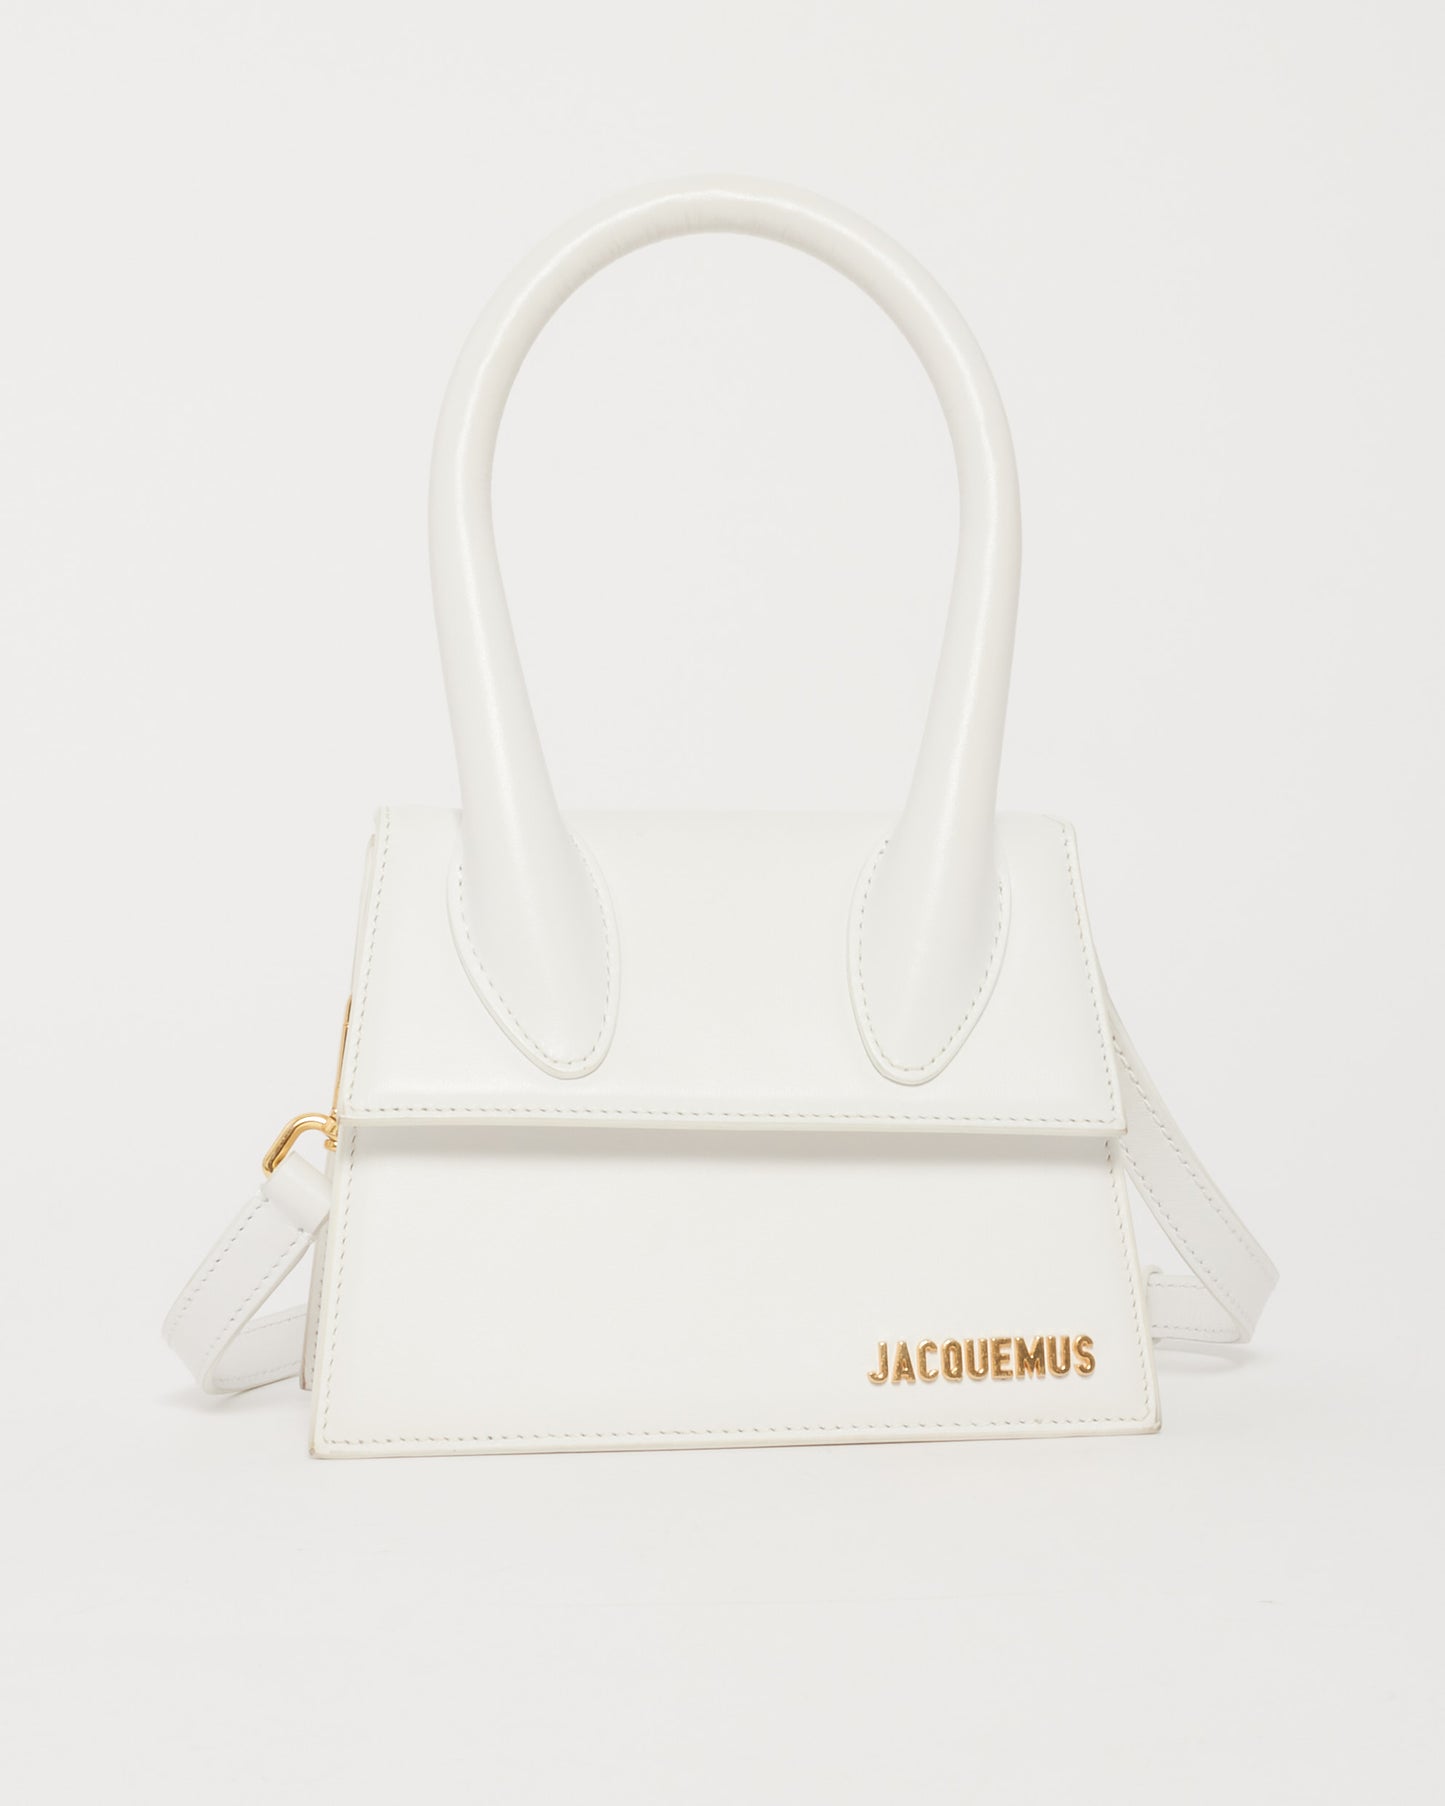 Jacquemus White Leather "Le Chiquito Moyen" Bag